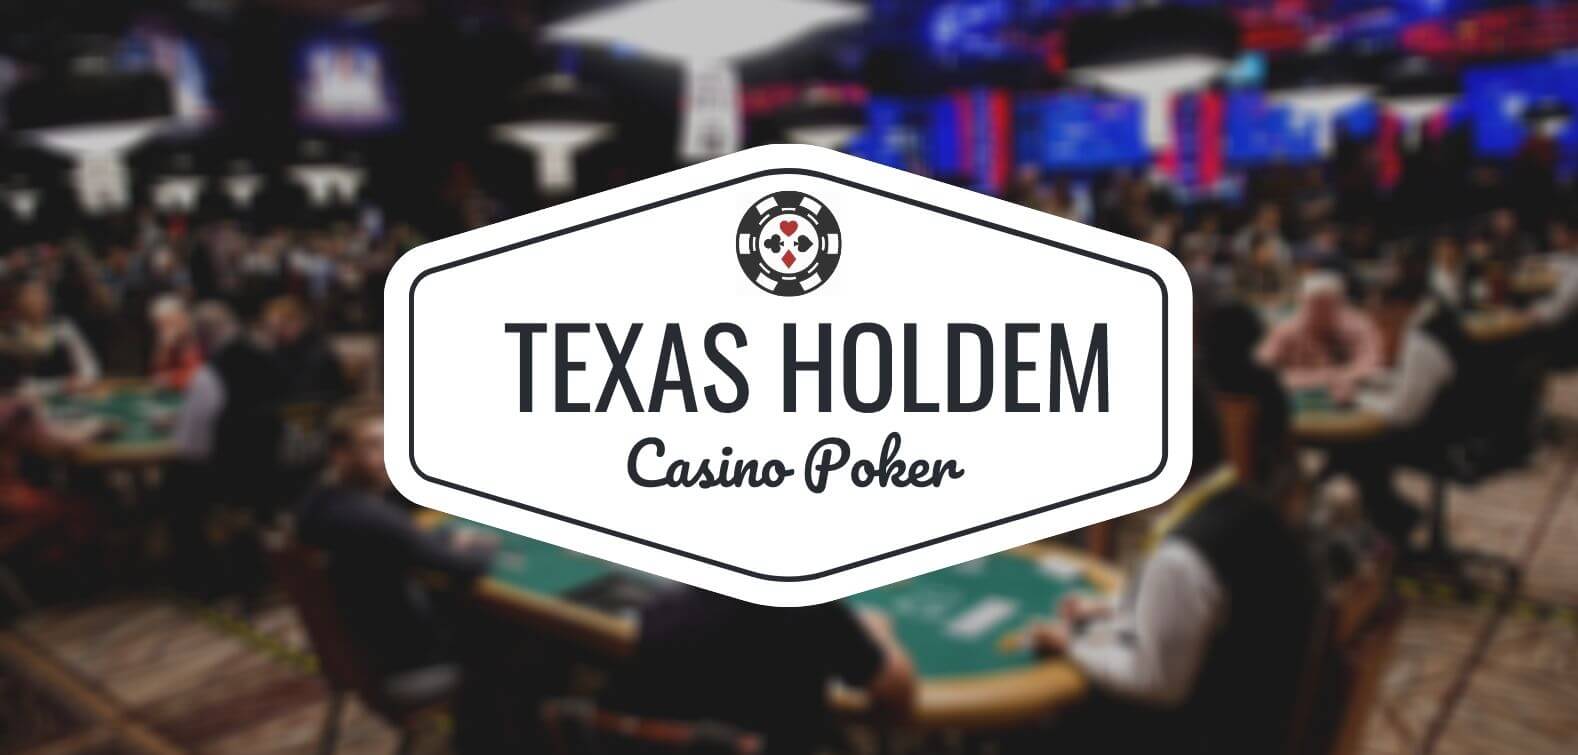 Texas Holdem tournaments